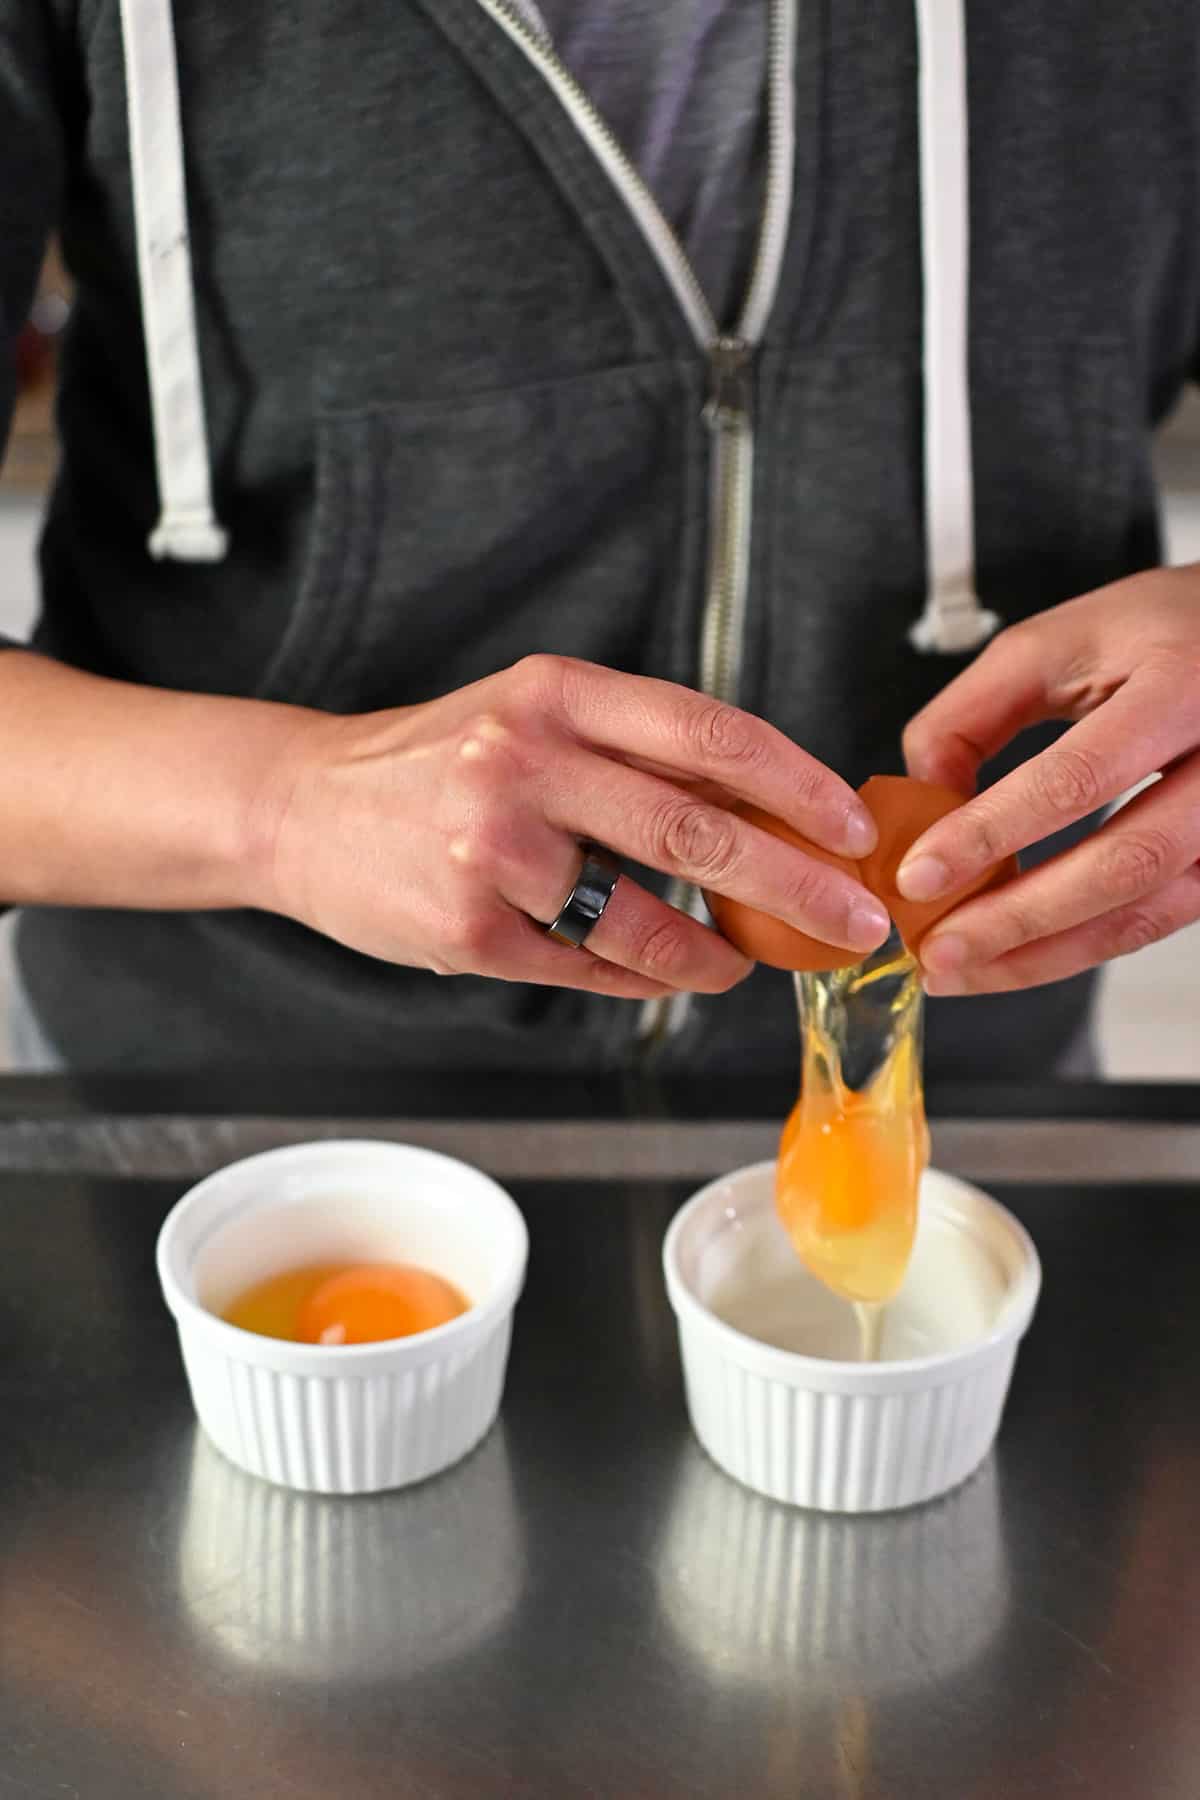 A person is cracking an egg into a white ramekin next to a ramekin containing a raw egg.